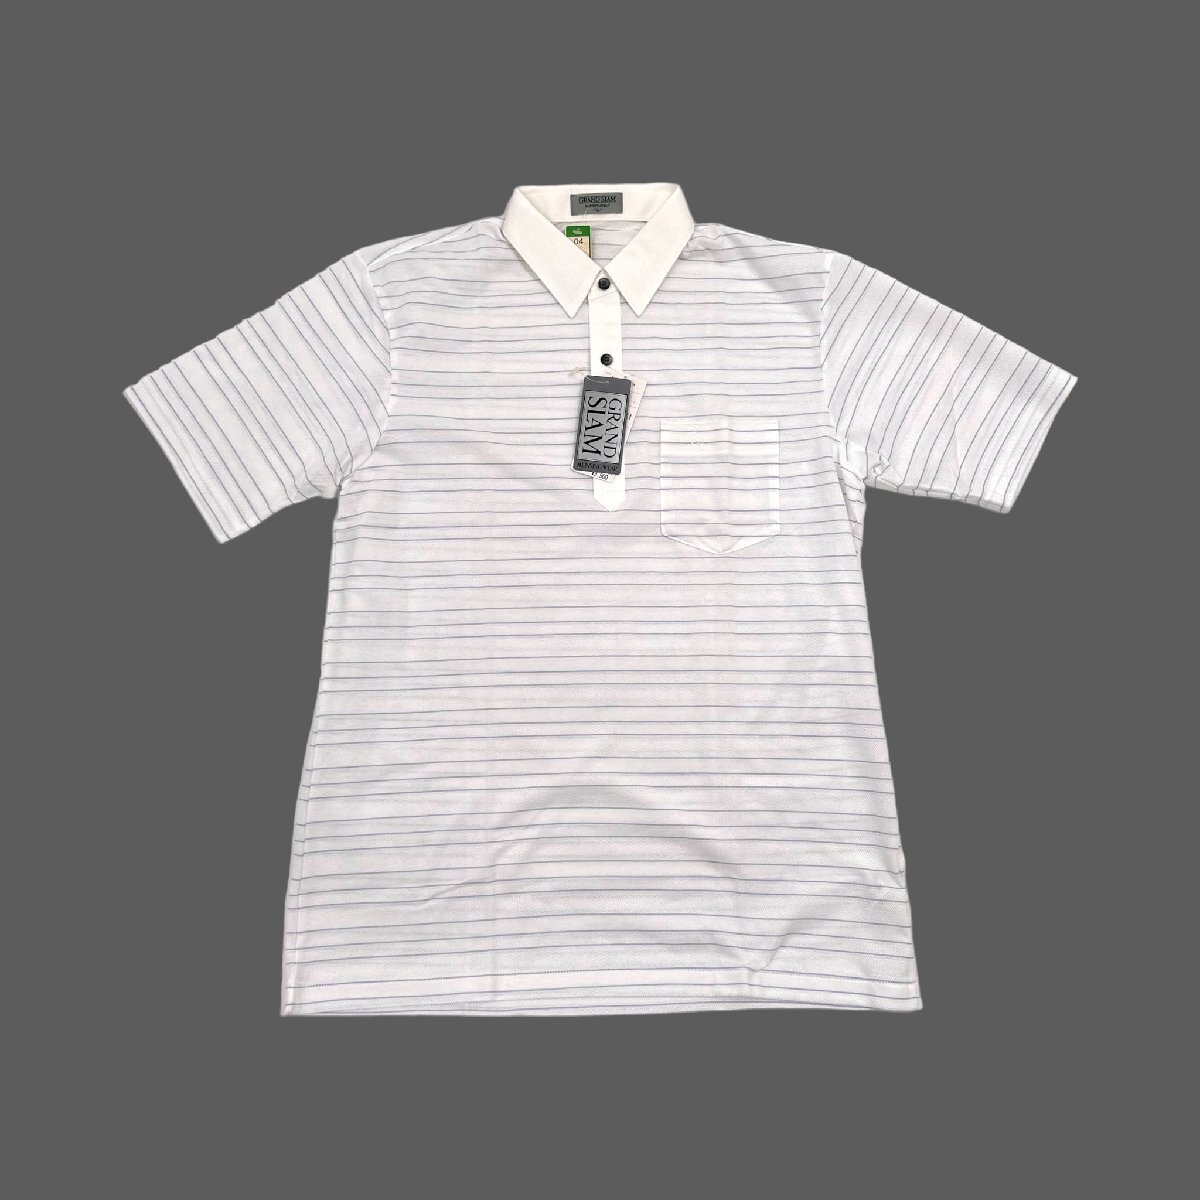  unused!! tag attaching *Munsingwear grandoslam Munsingwear wear border pattern polo-shirt with short sleeves L size / white group white / men's sport Golf 